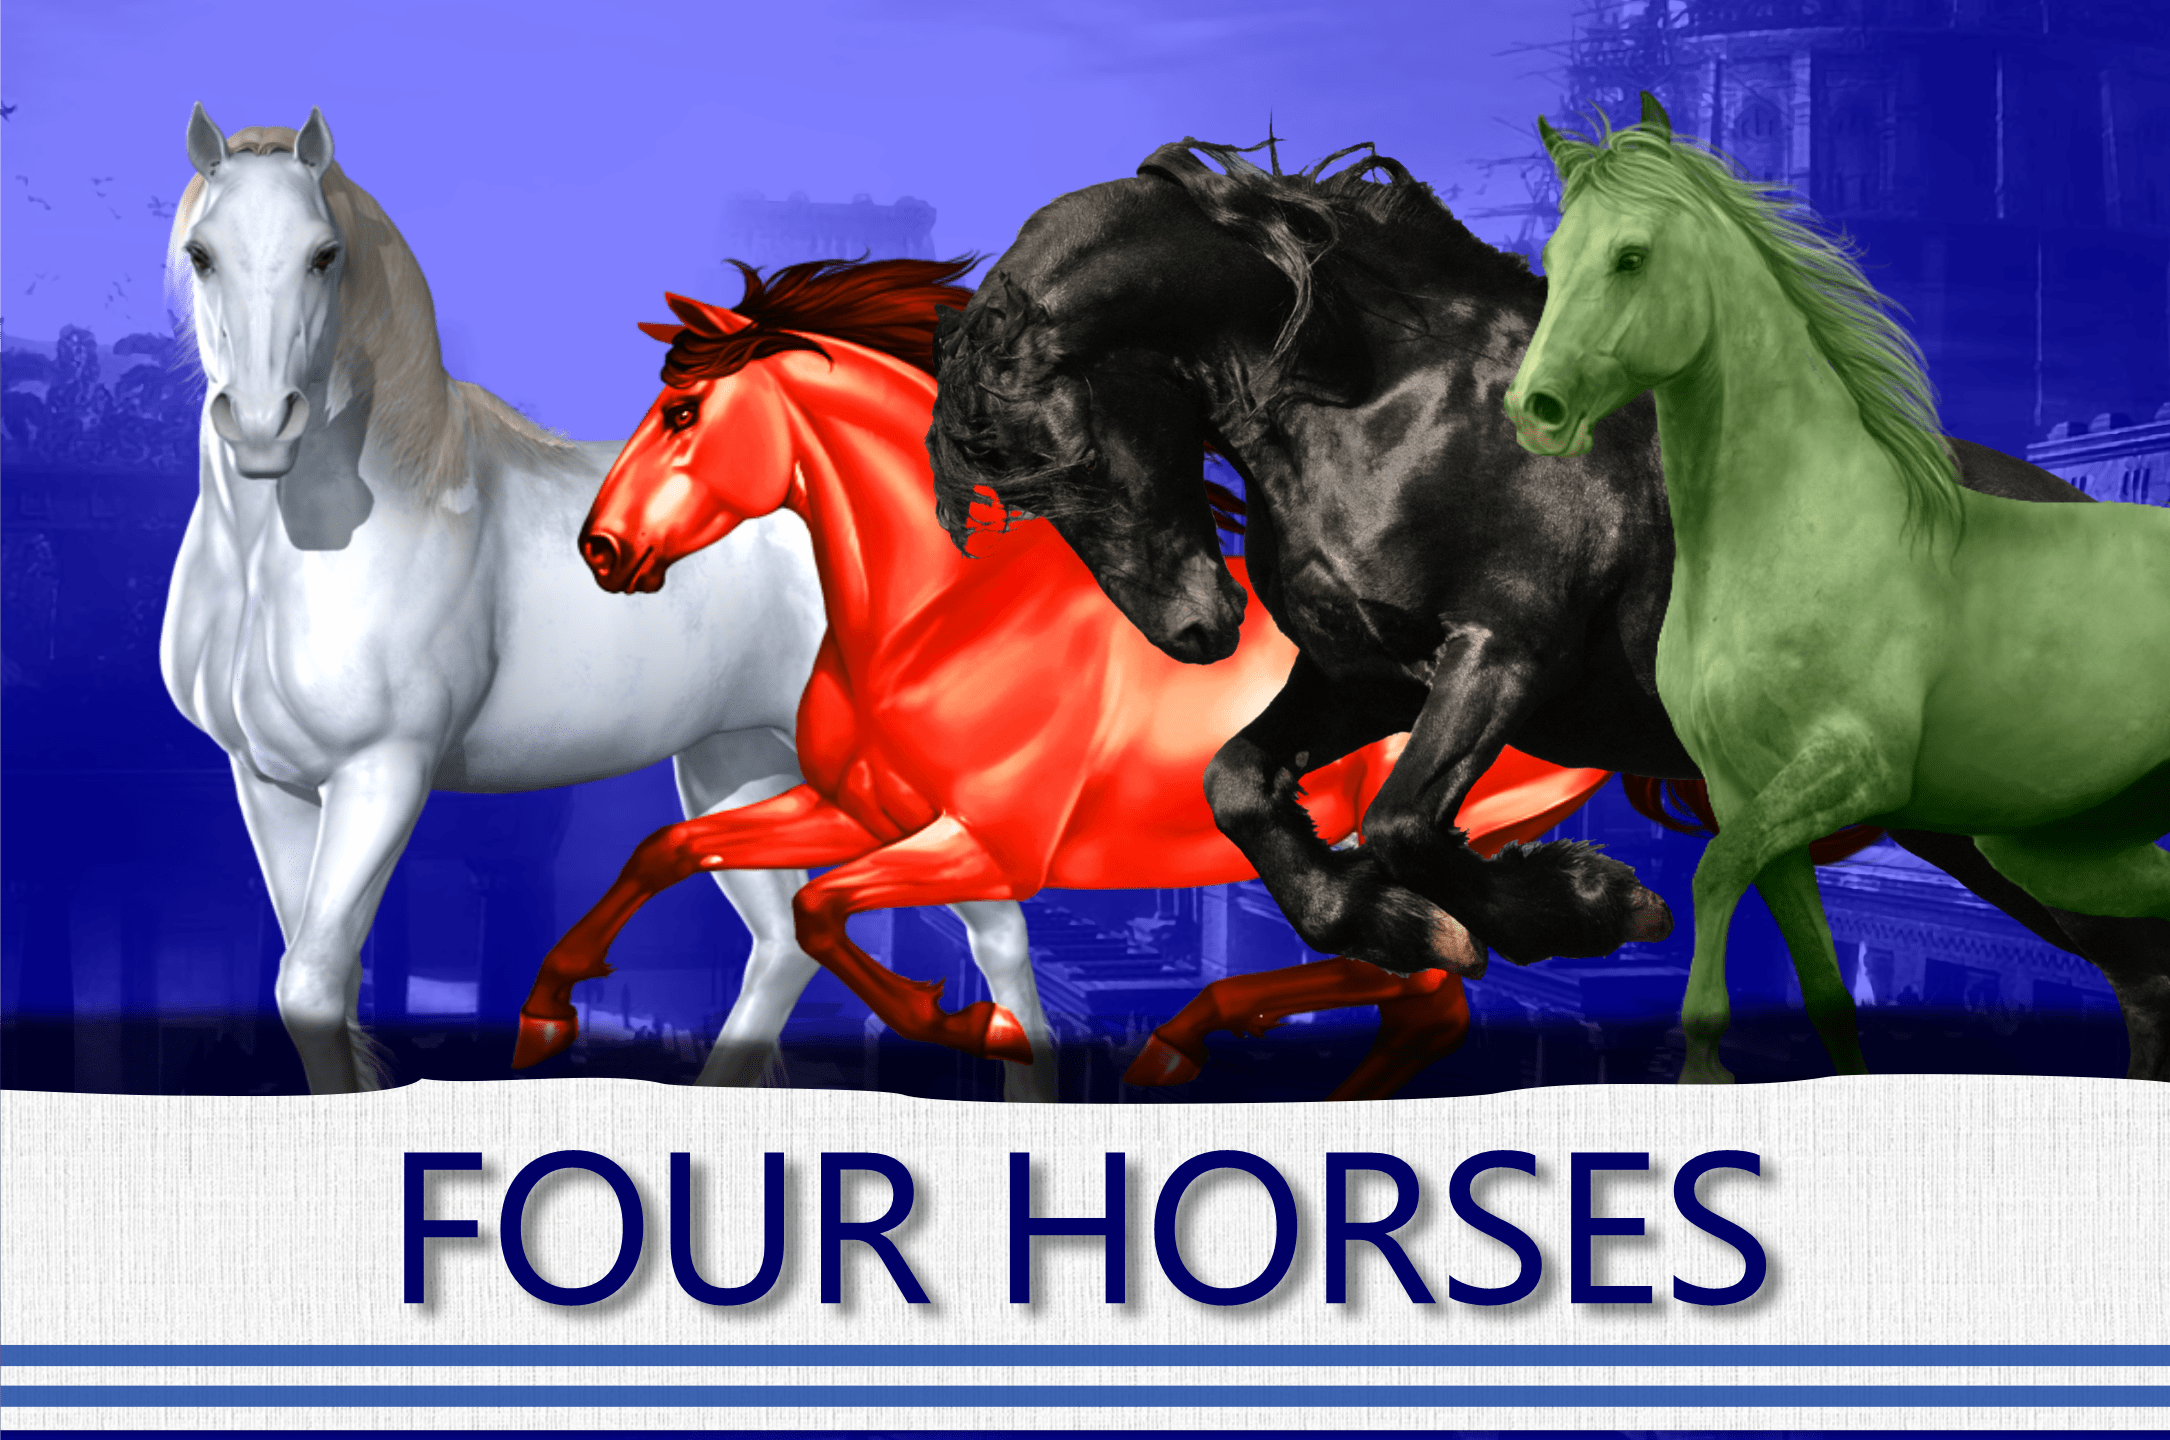 The Four Horses of Revelation